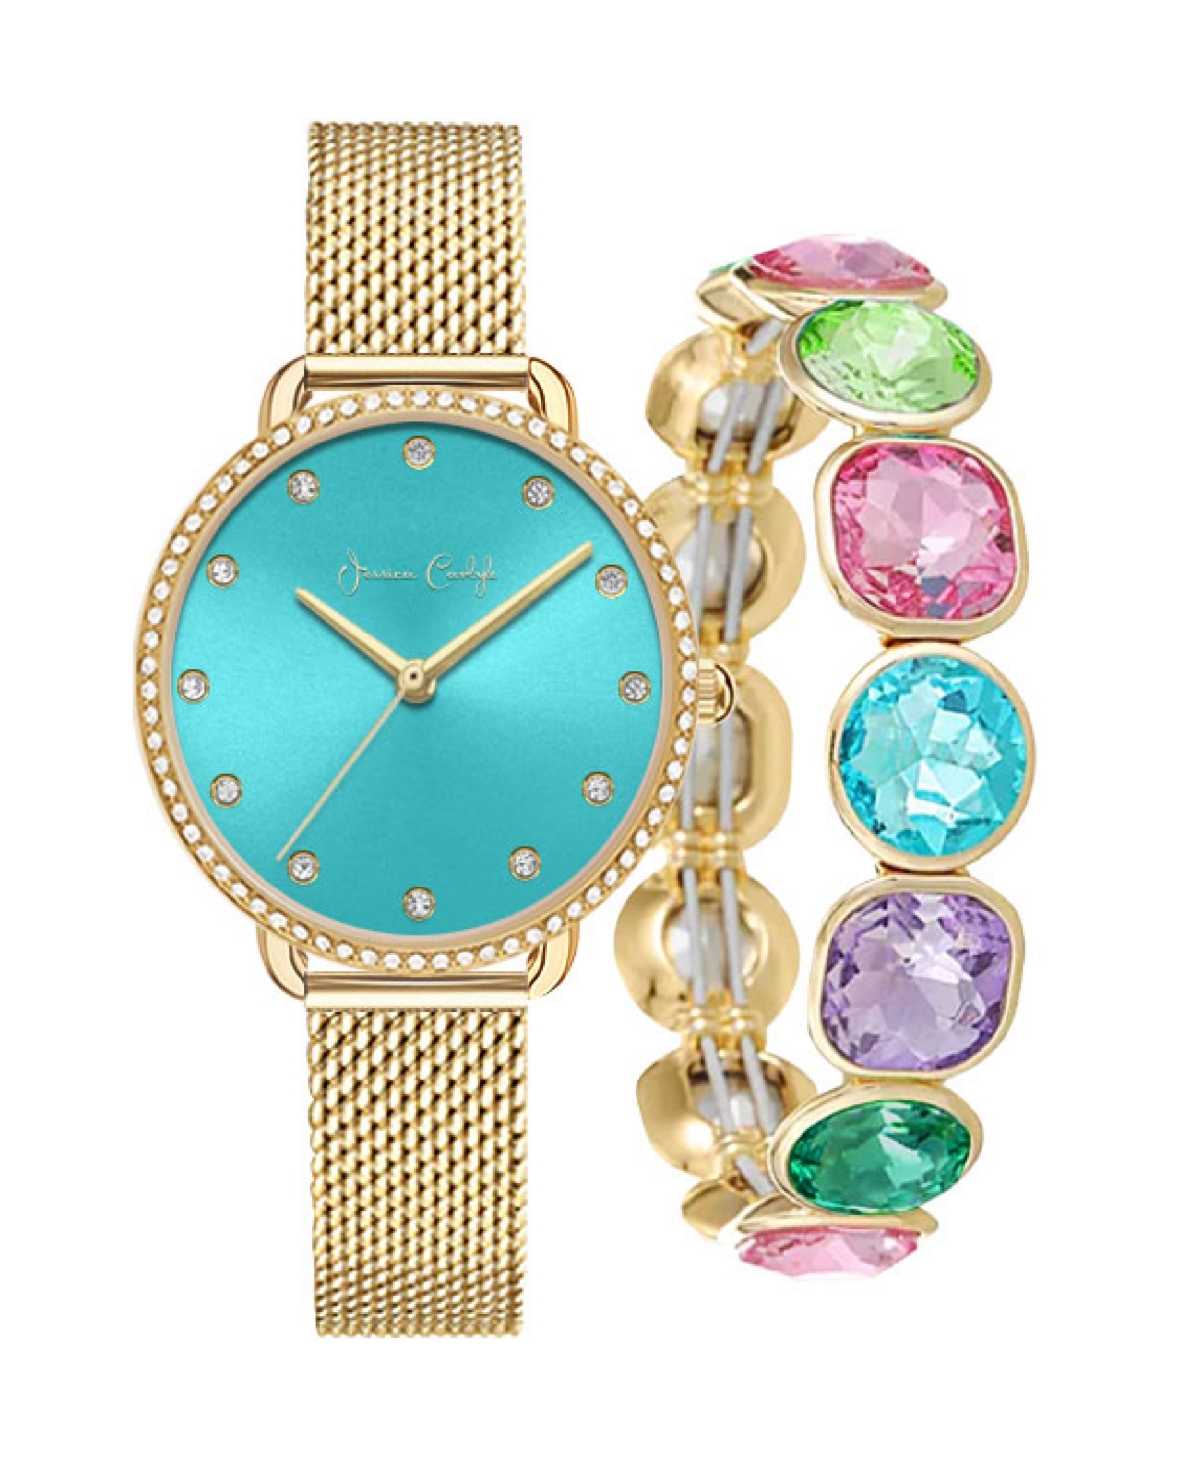 Women's Quartz Gold-Tone Alloy Watch 34mm Gift Set - Shiny Gold, Turquoise Sunray